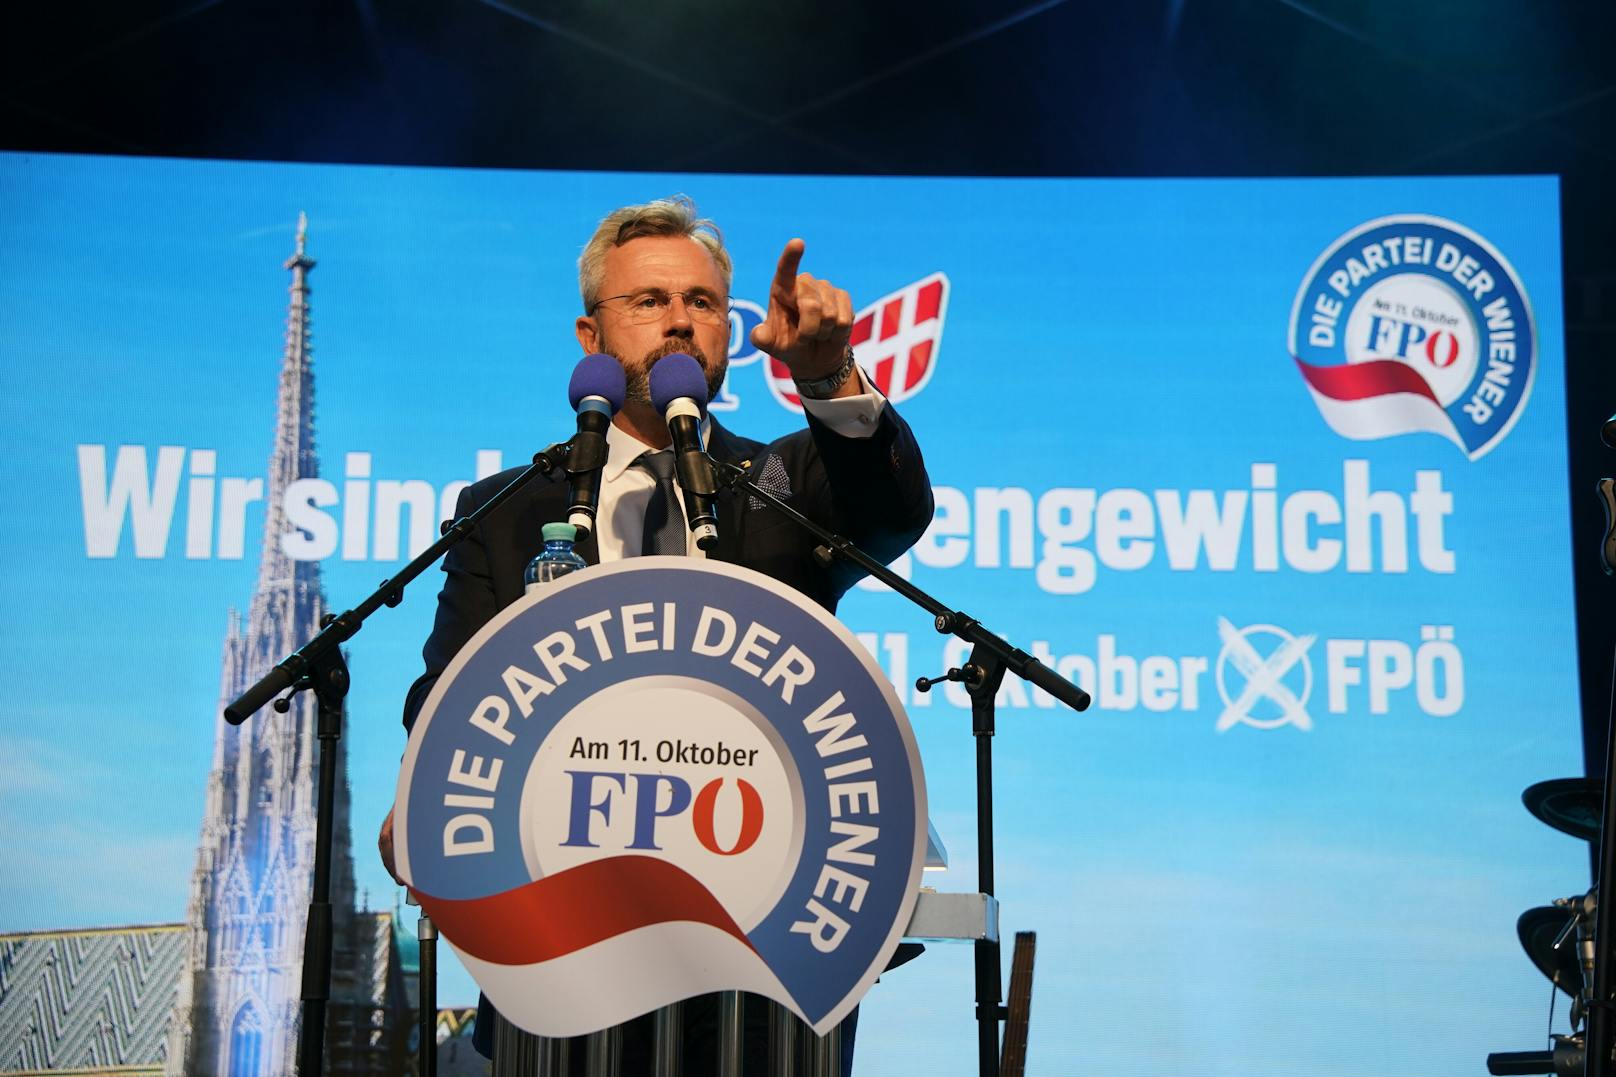 Parteichef Norbert Hofer wetterte gegen die rot-grüne Koalition in Wien – und gegen die Corona-maßnahmen.